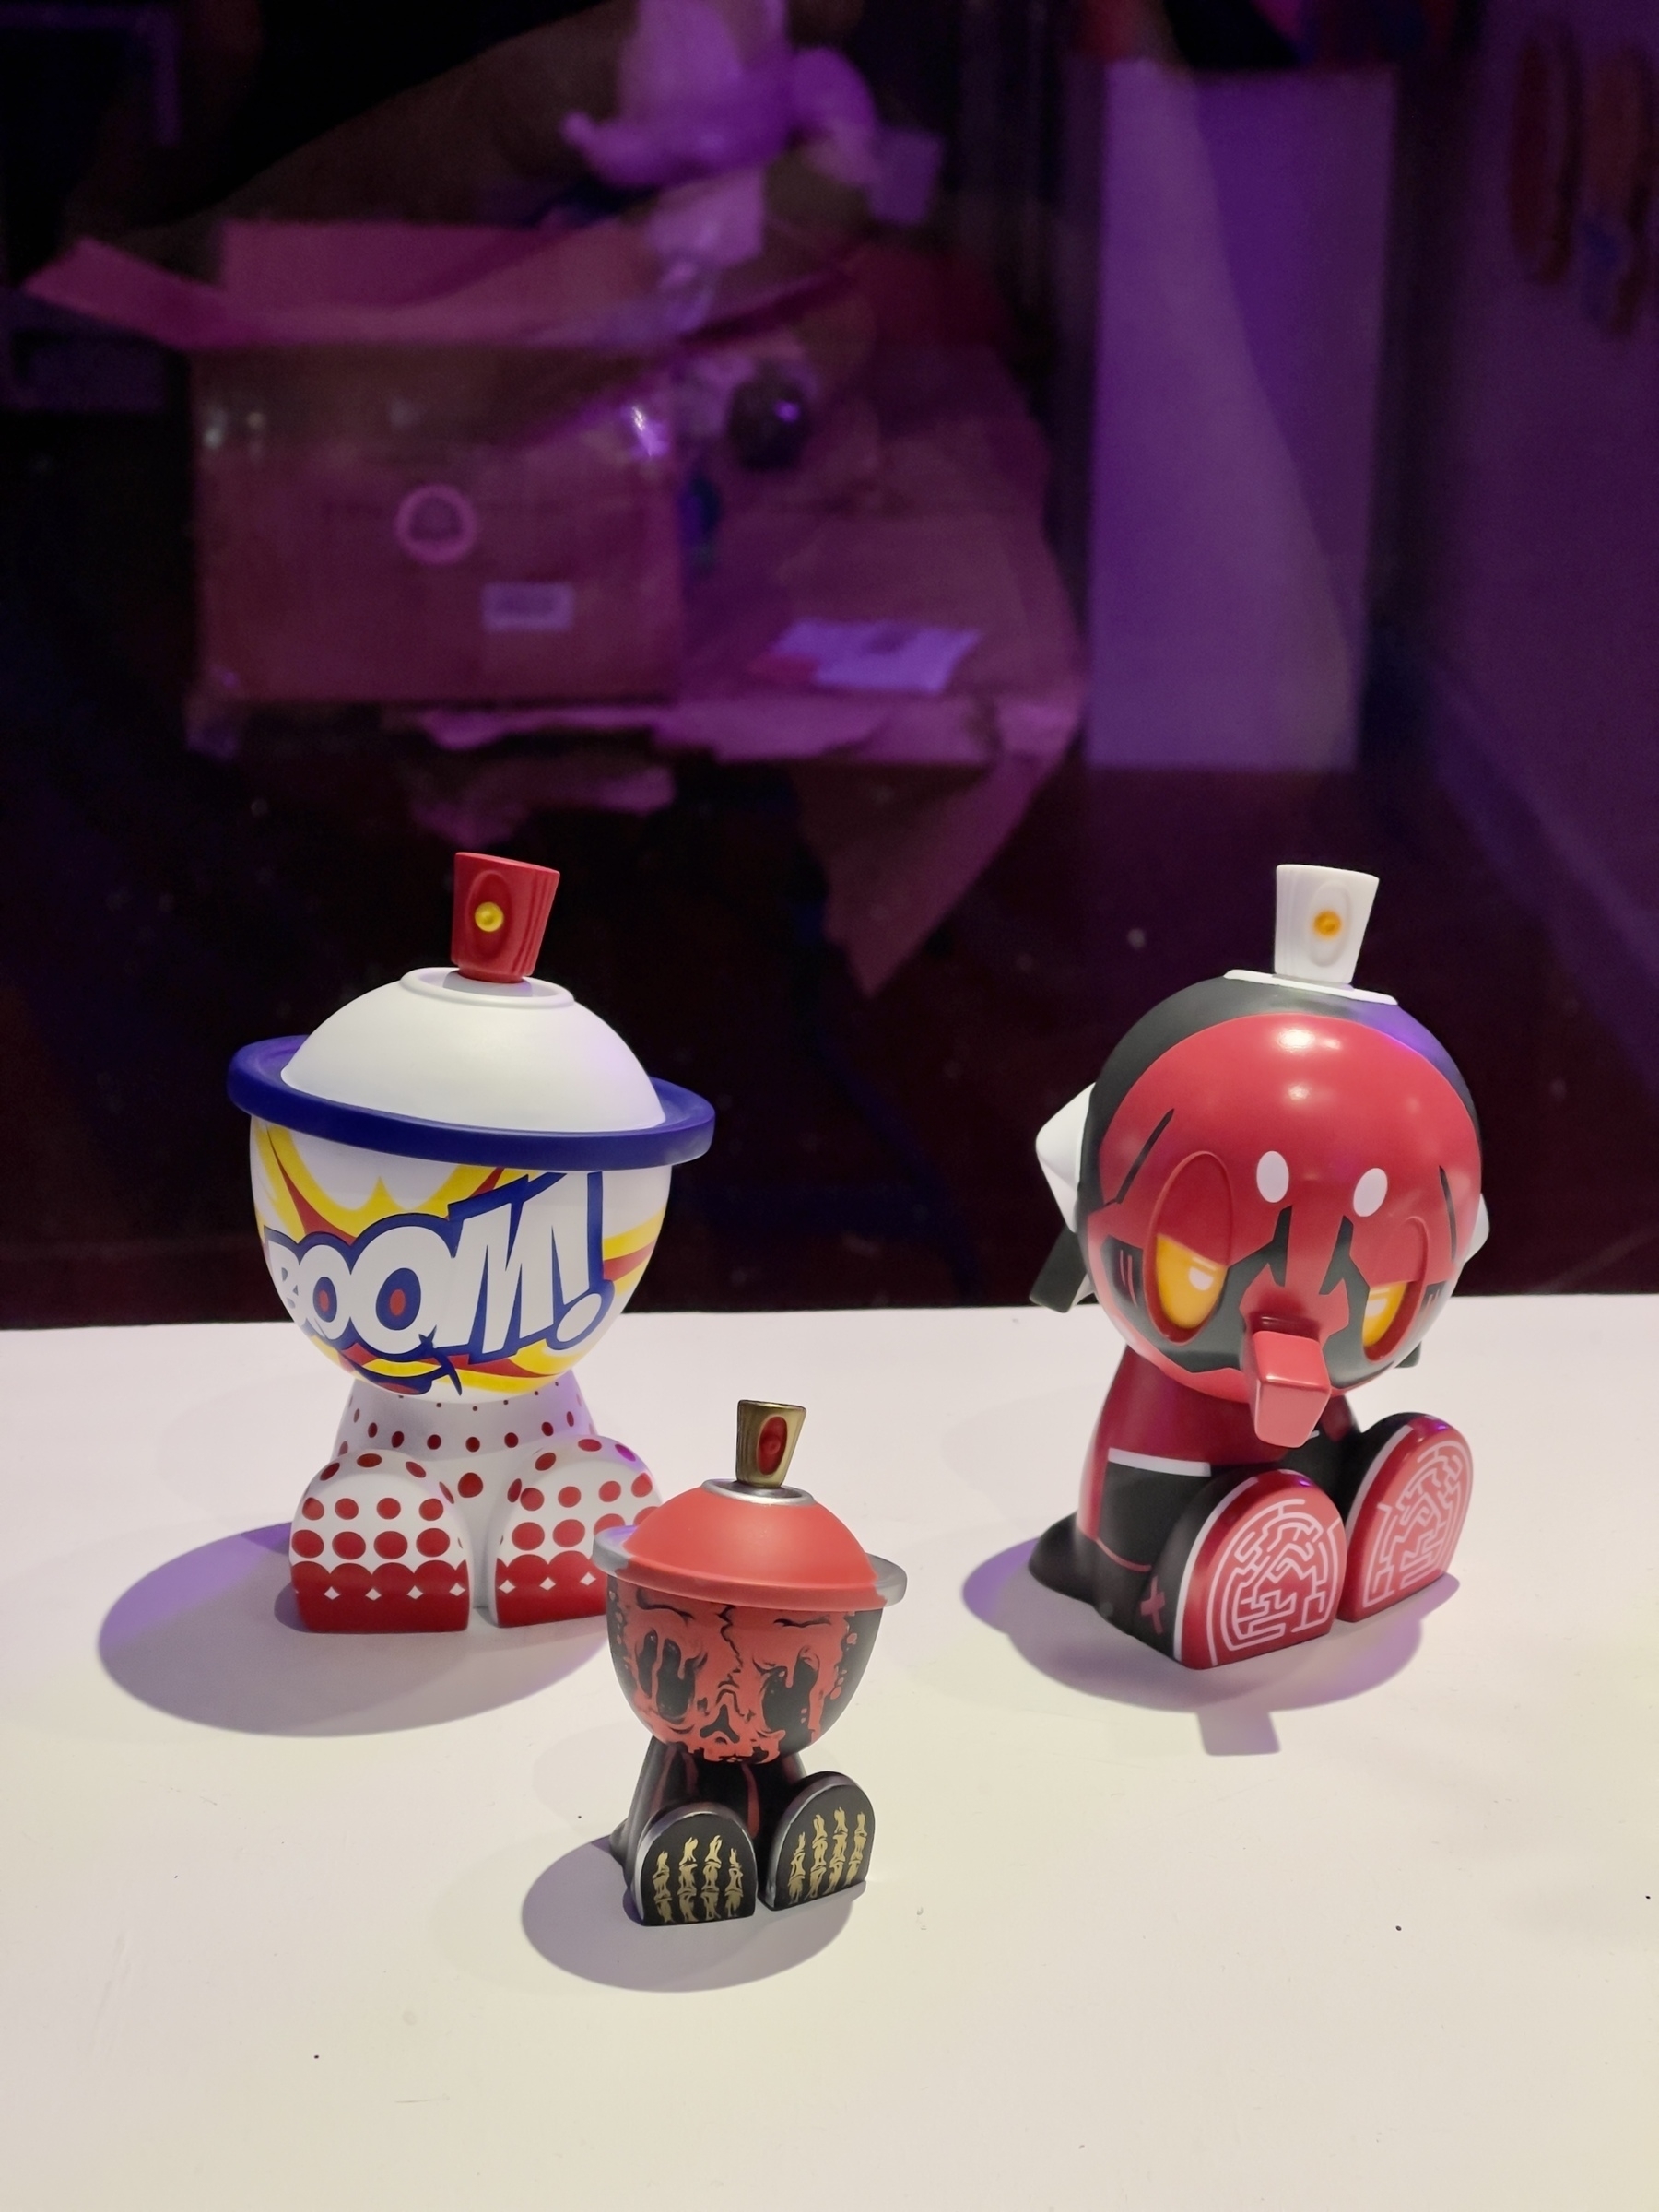 Miniature robotic art toys.